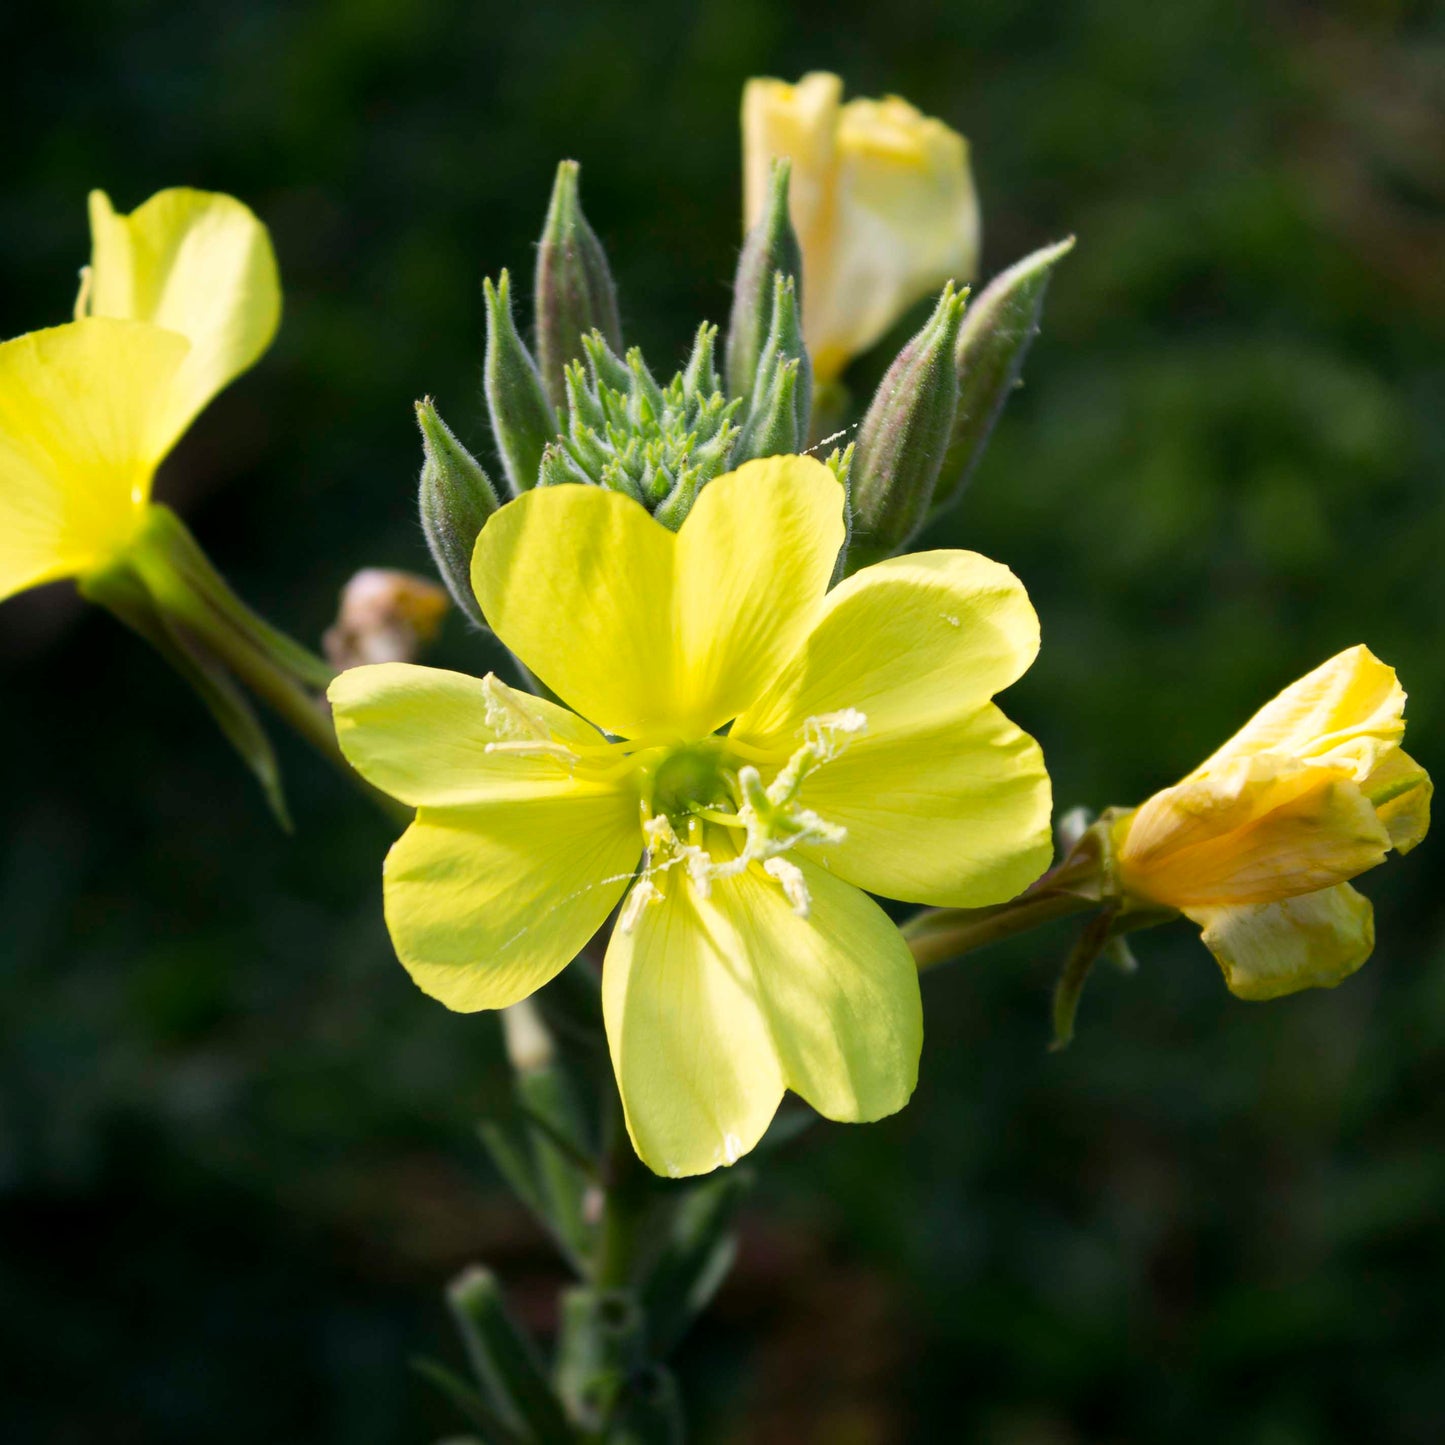 Evening primrose Handcrafted plant essences flower remedies